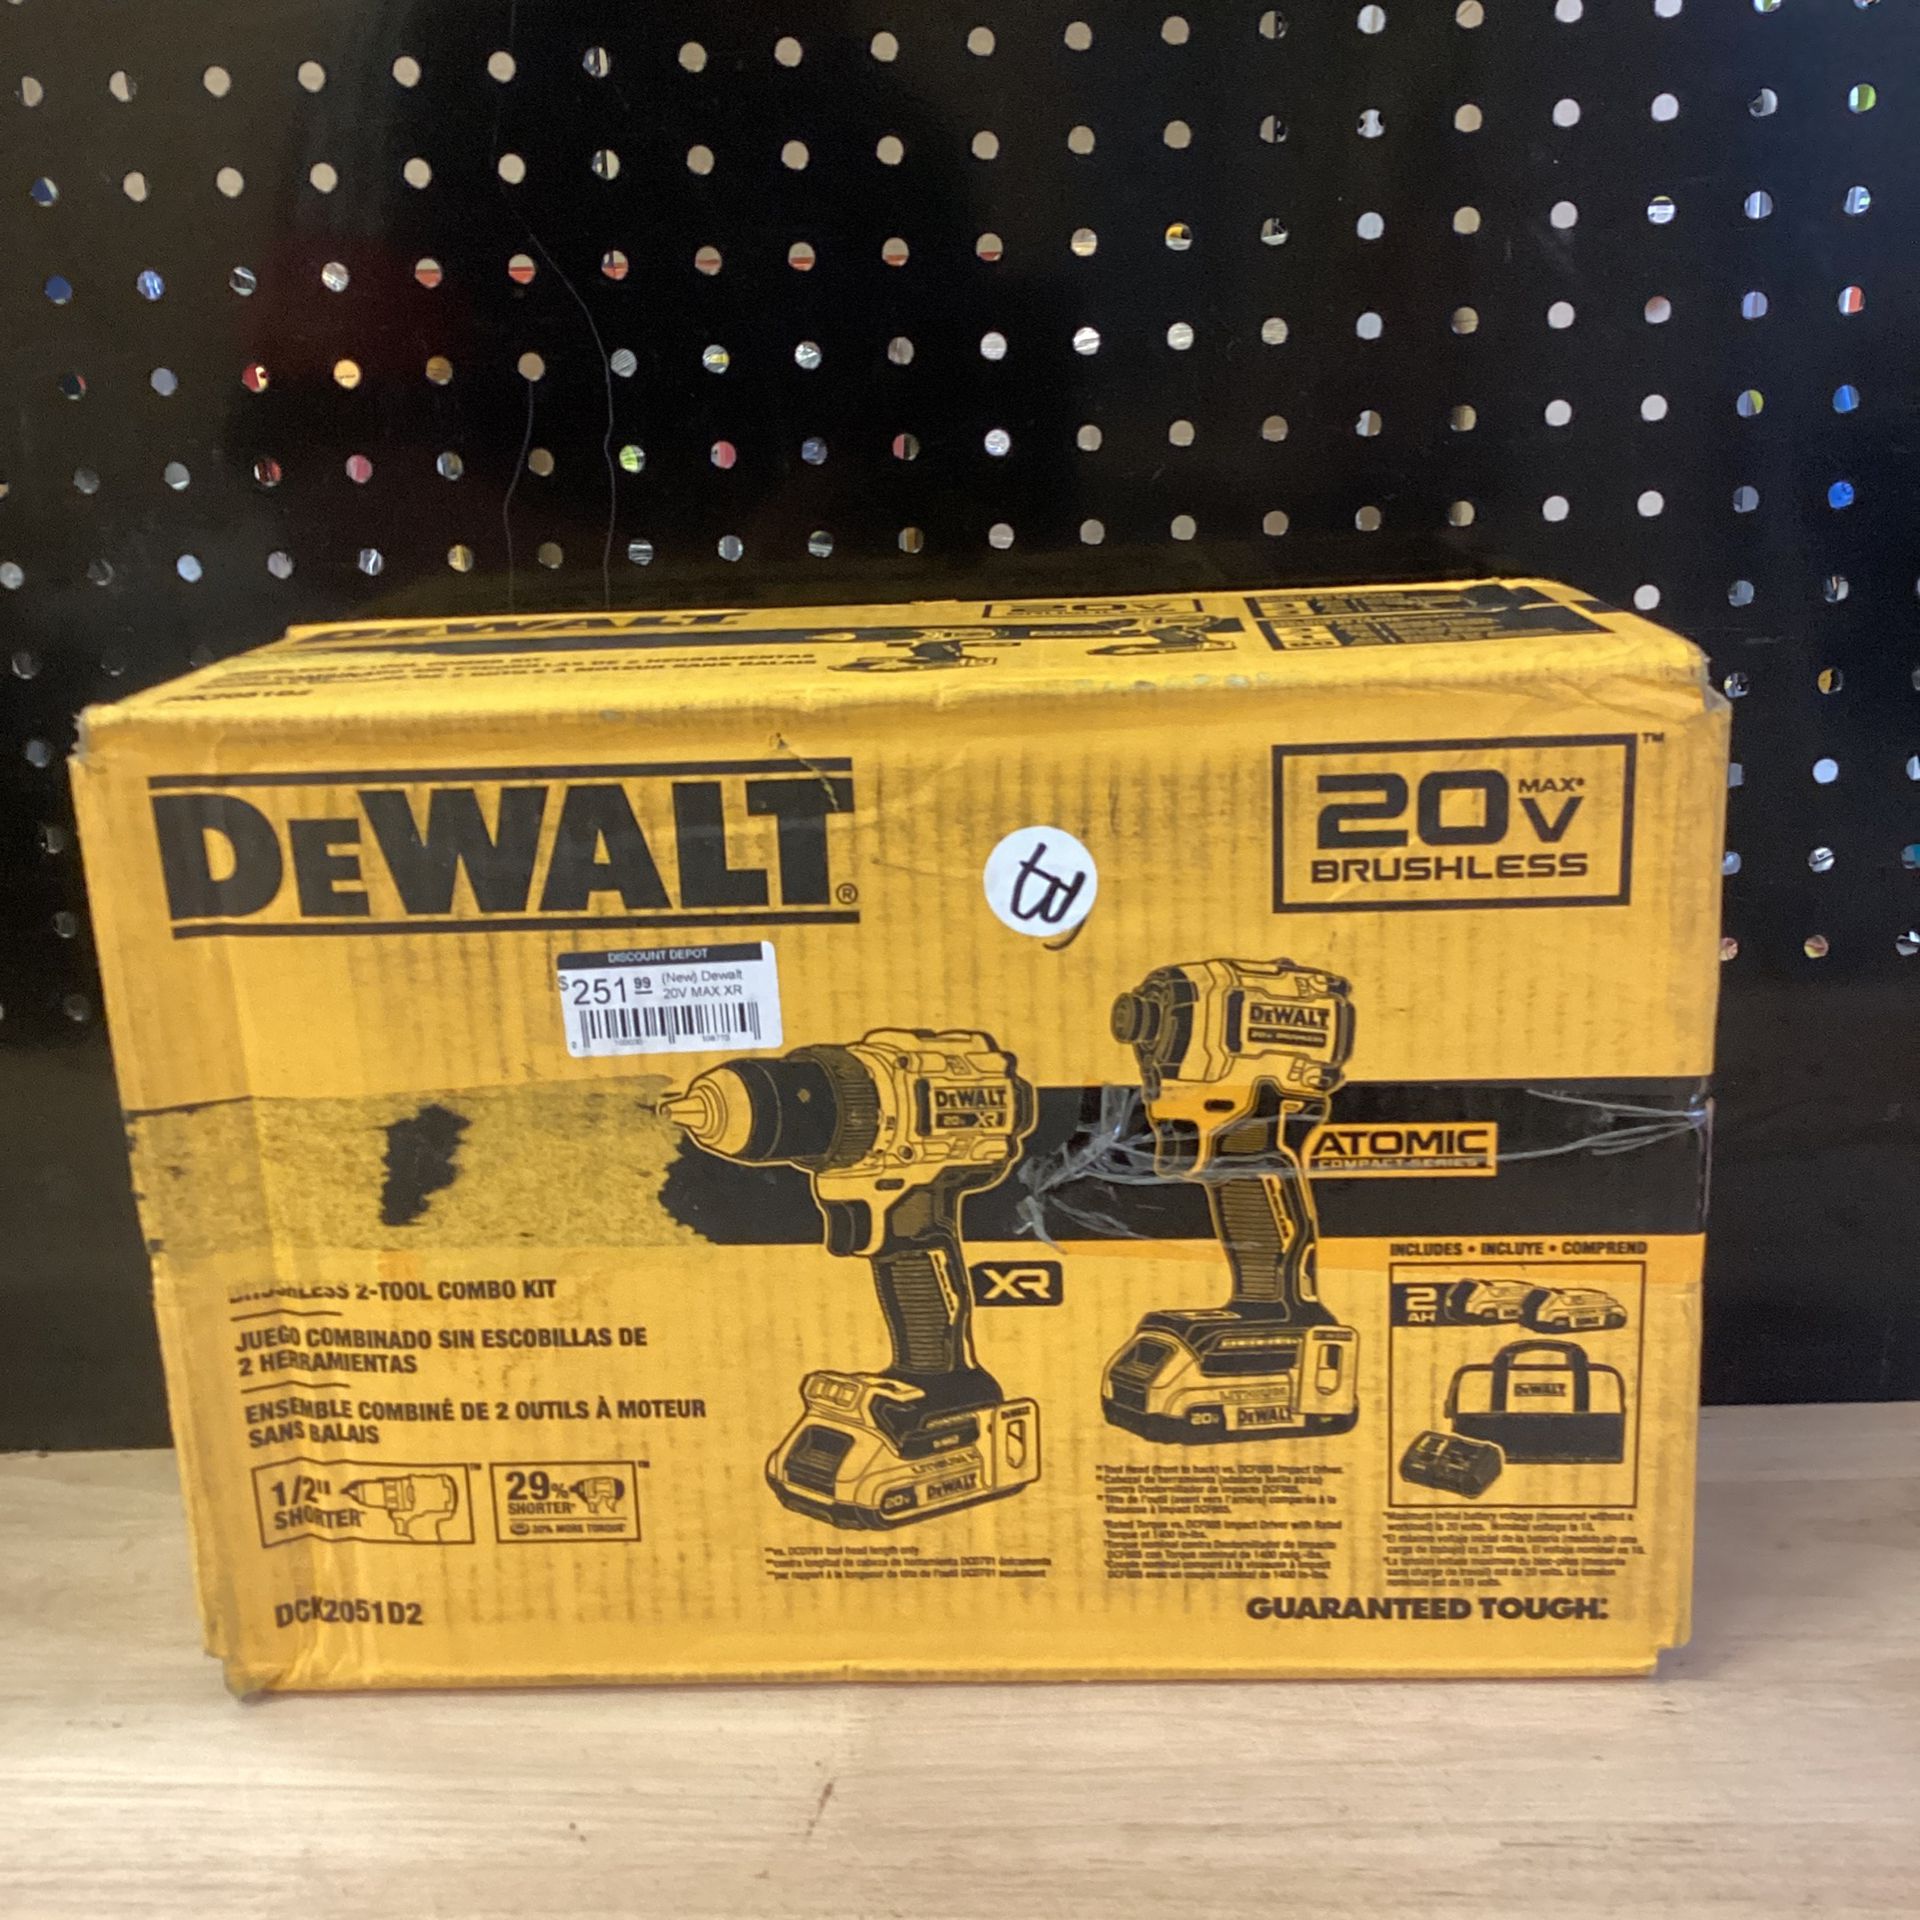 DeWalt DCK2051D2 20V Max XR Cordless Drill/Driver and Atomic Impact Driver Combo Kit (2-Tool)